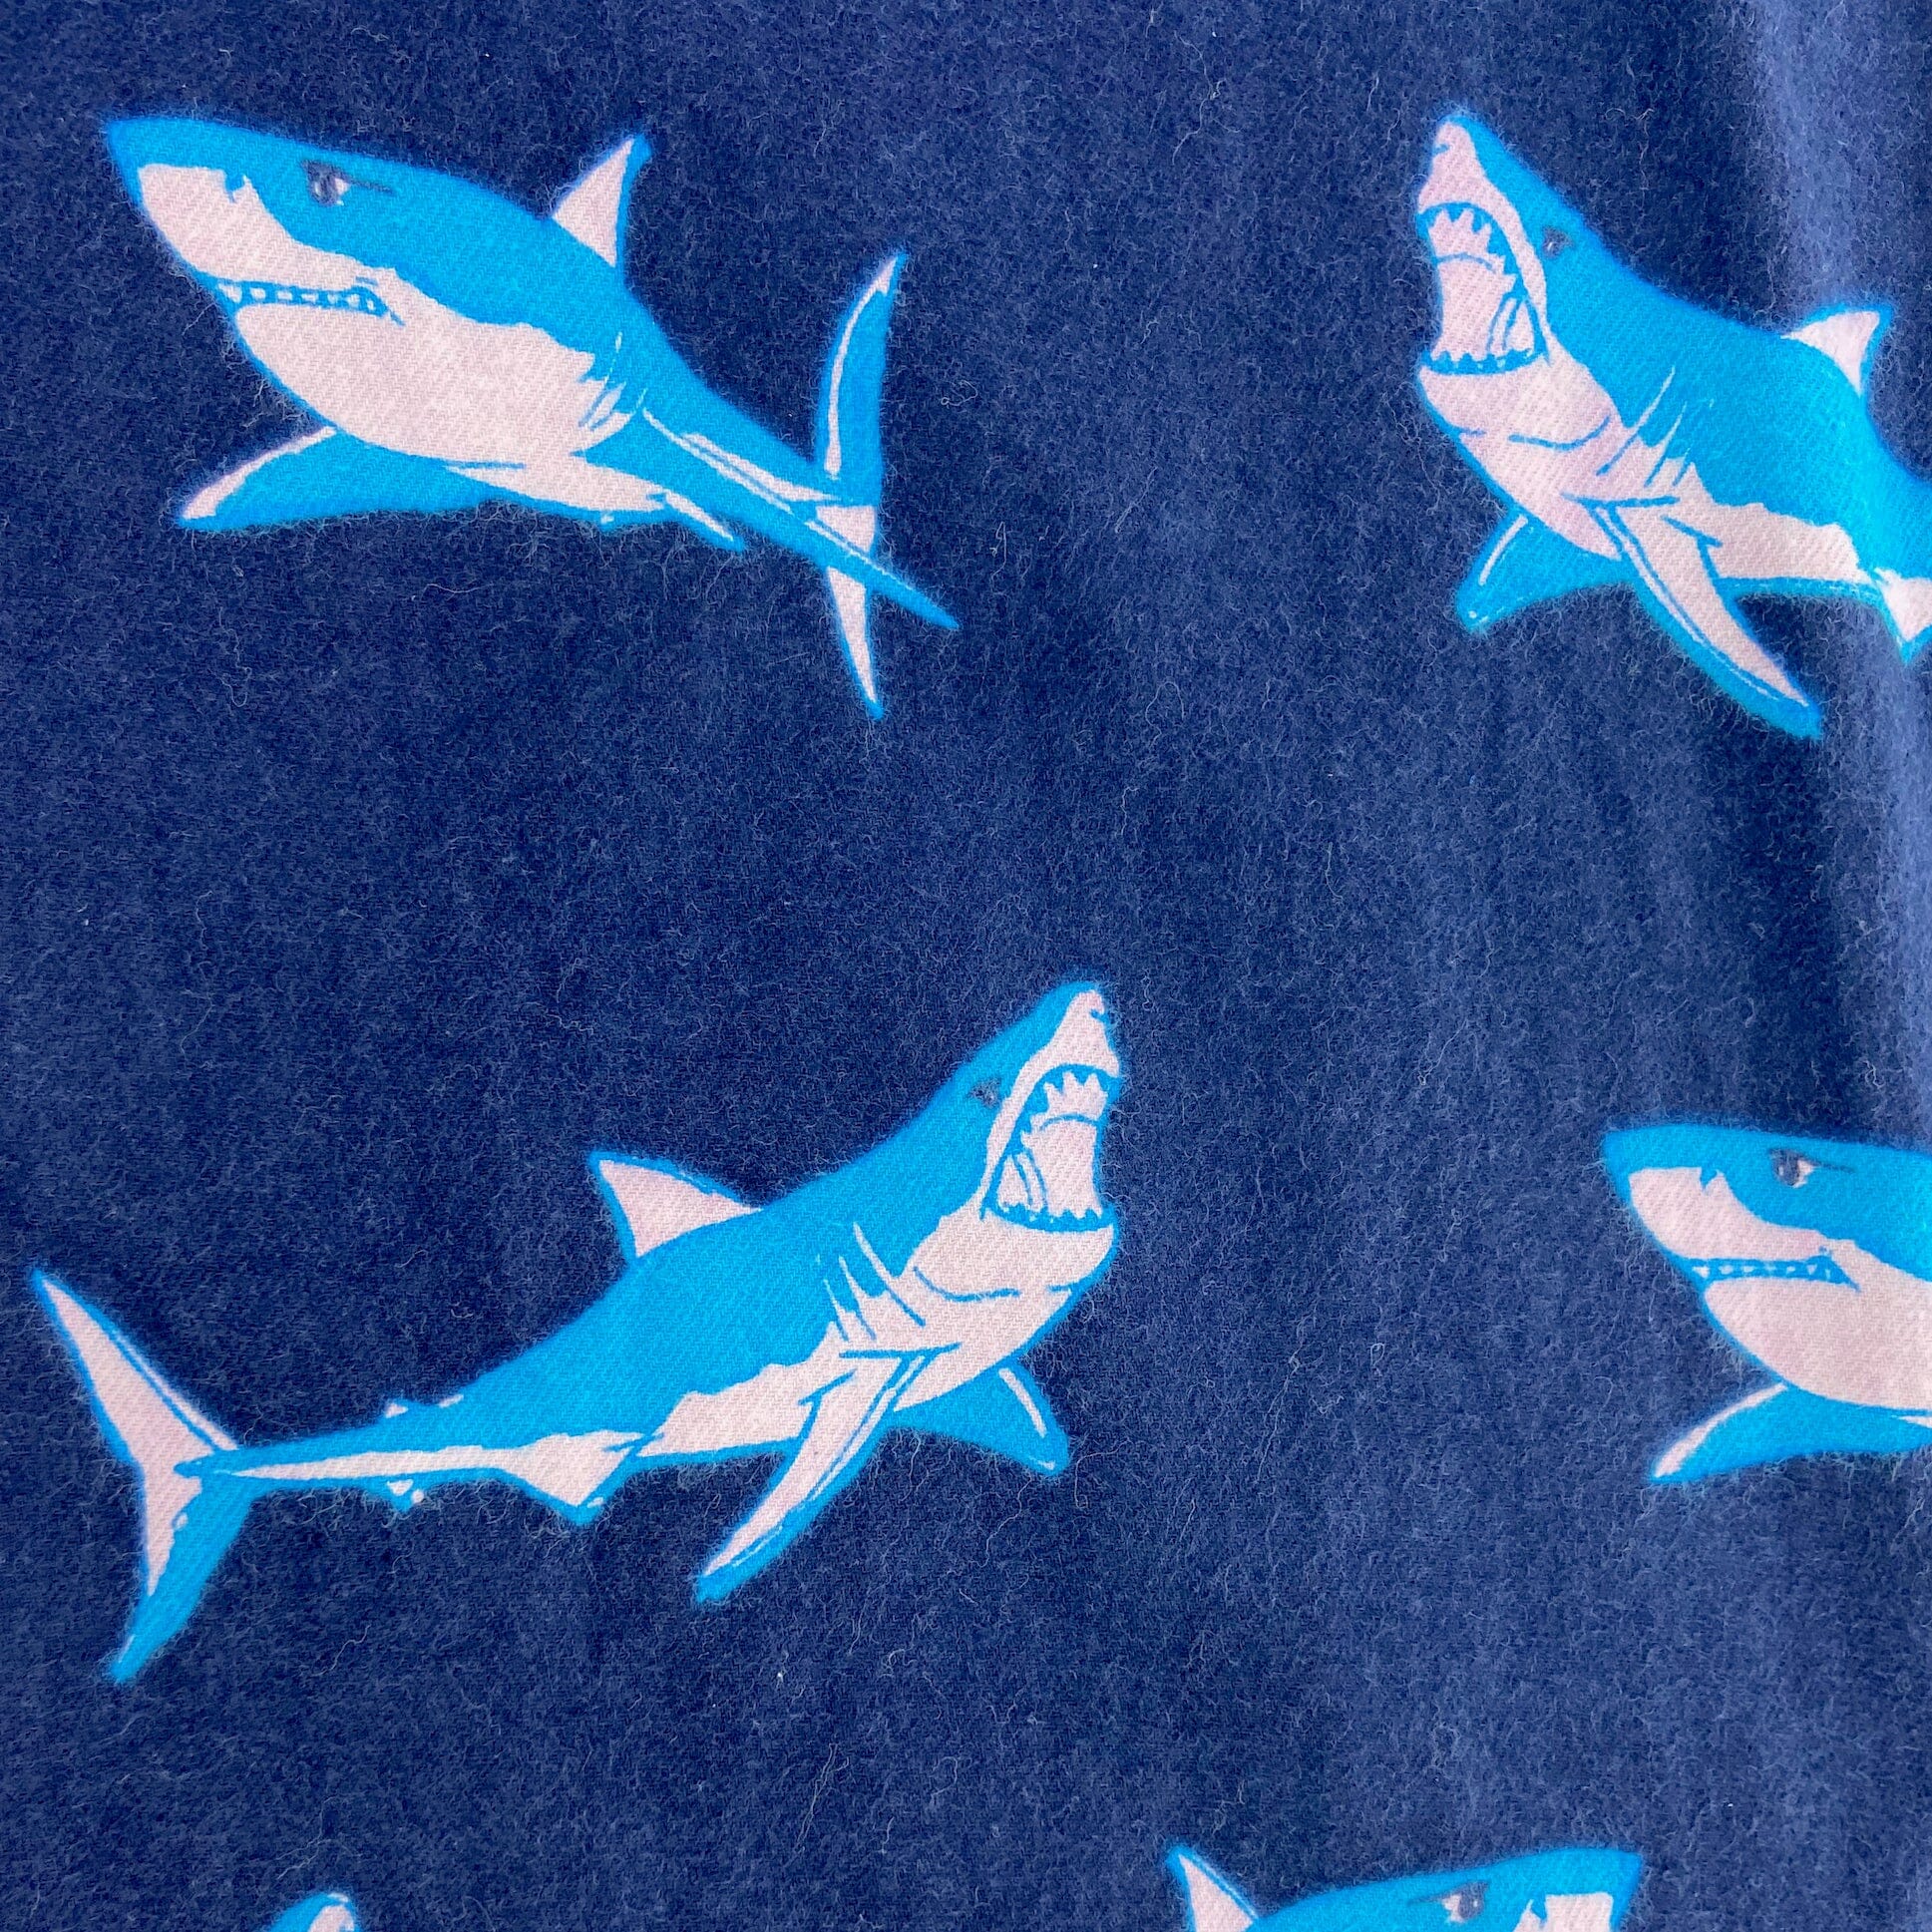 Men's Great White Shark Patterned Woven Cotton Long PJ Pajama Pants